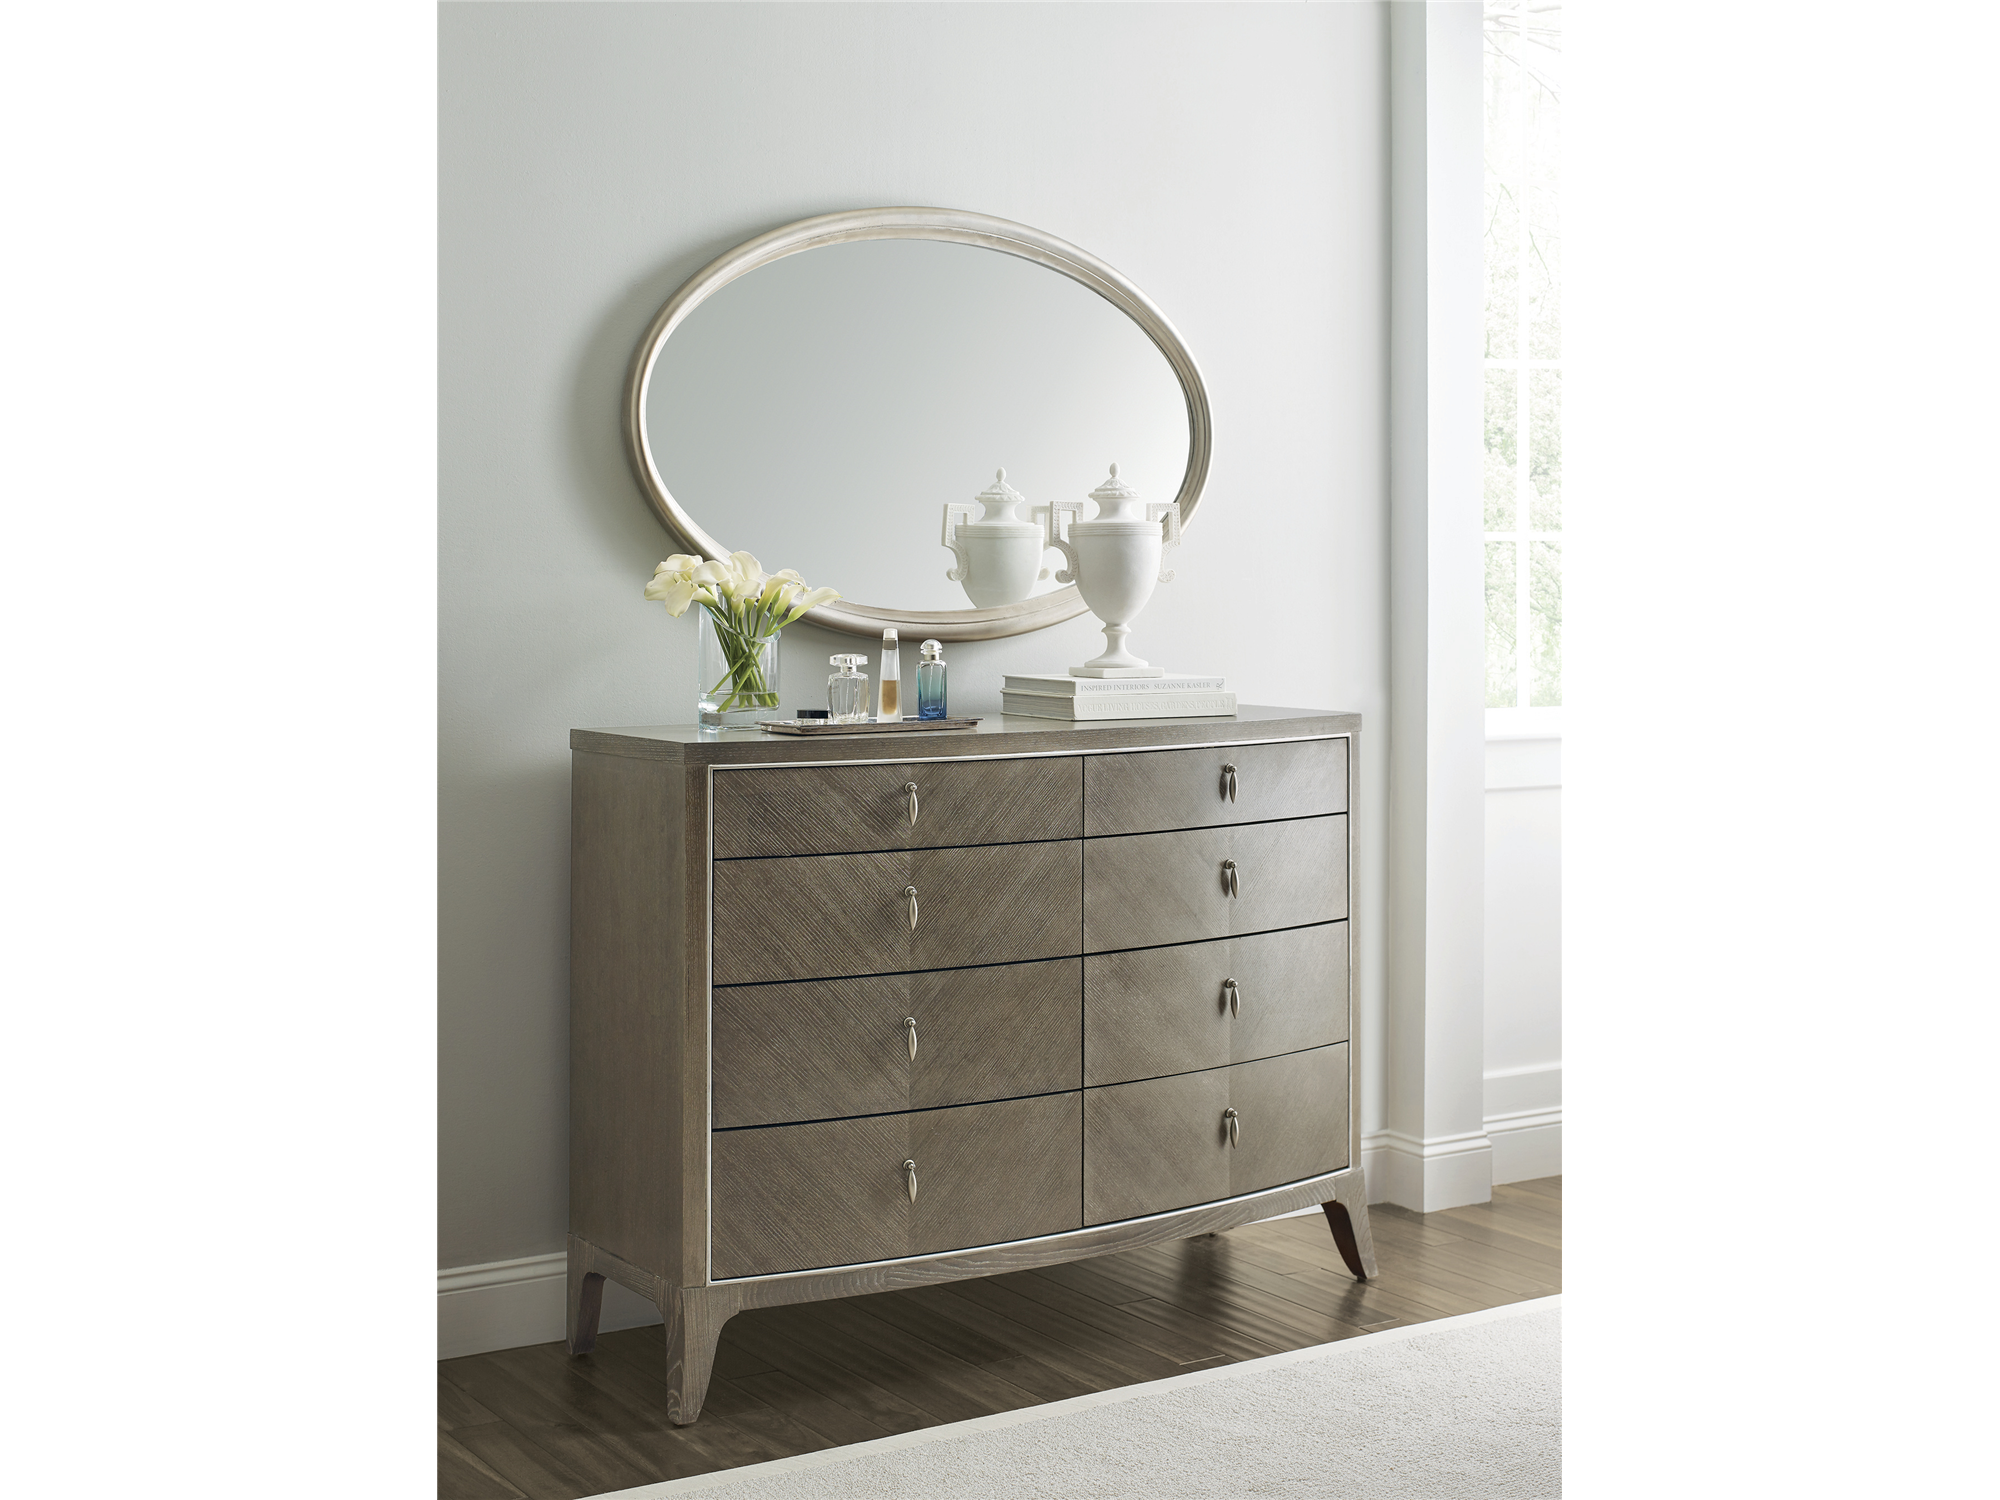 Wilt Mirror in Soft Silver - Euro Living Furniture